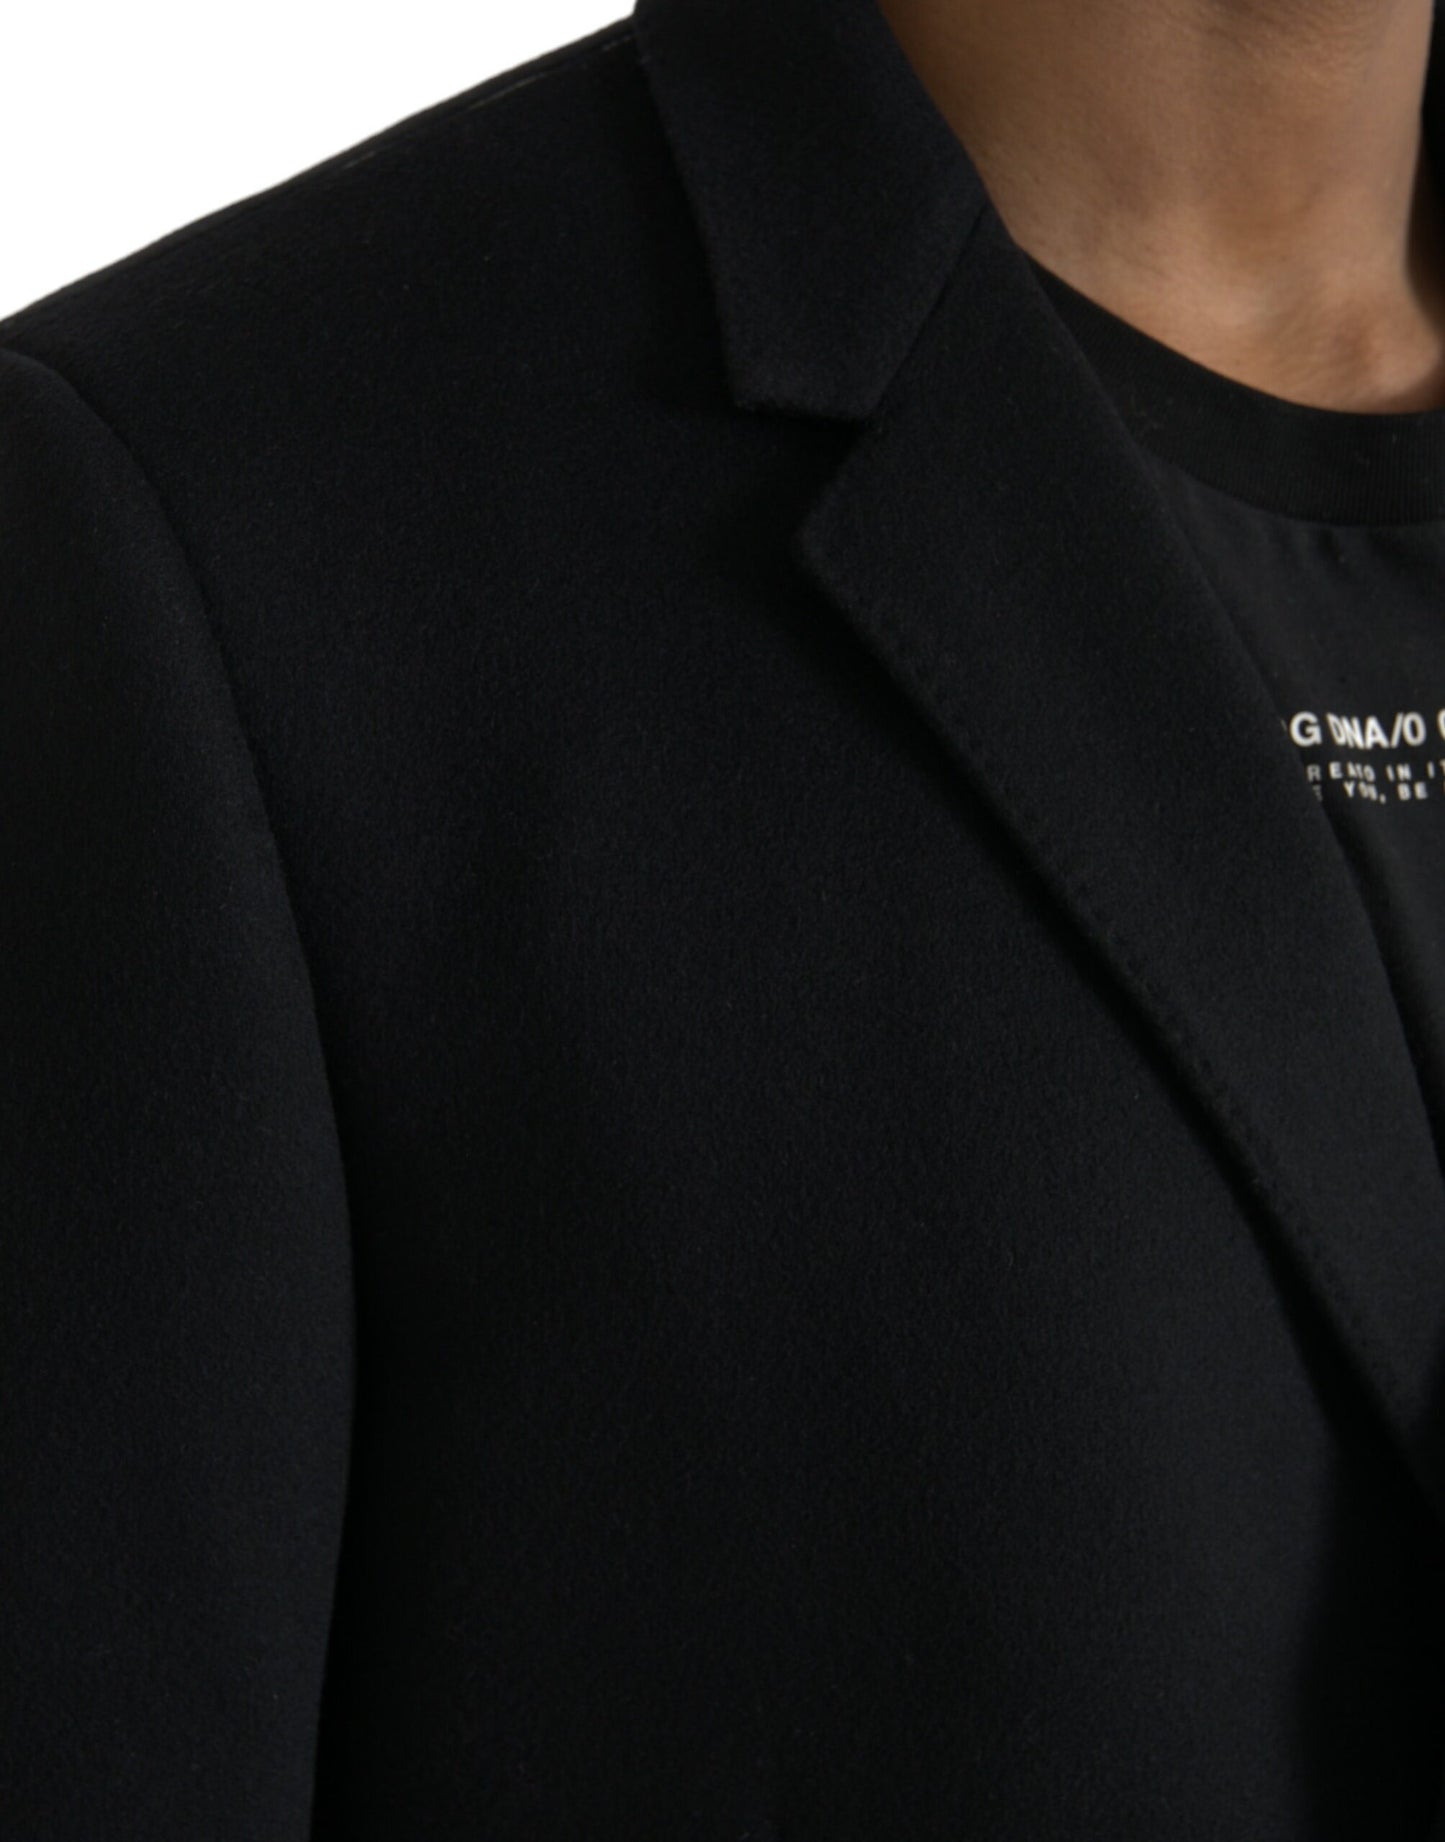 Black Wool Cashmere Trench Coat Jacket